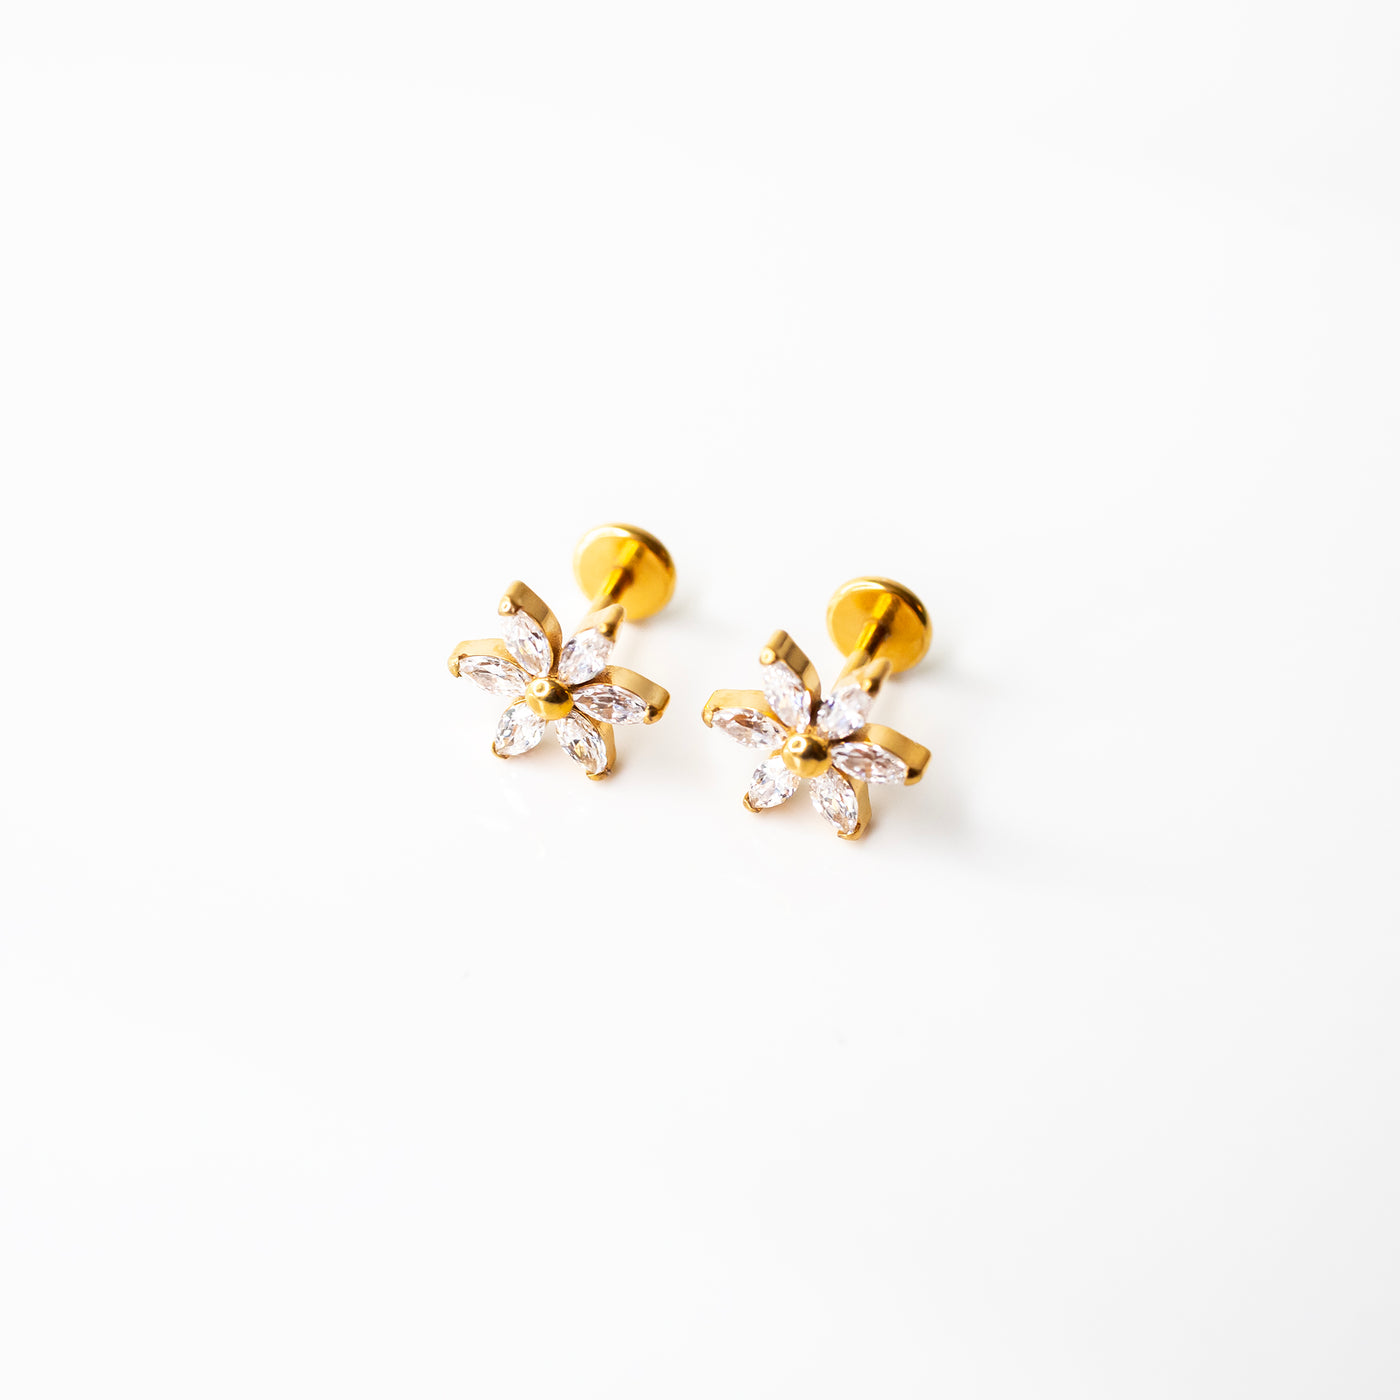 Daisy Marquise Flower Flat Back Sleeper Earrings - Six Stones